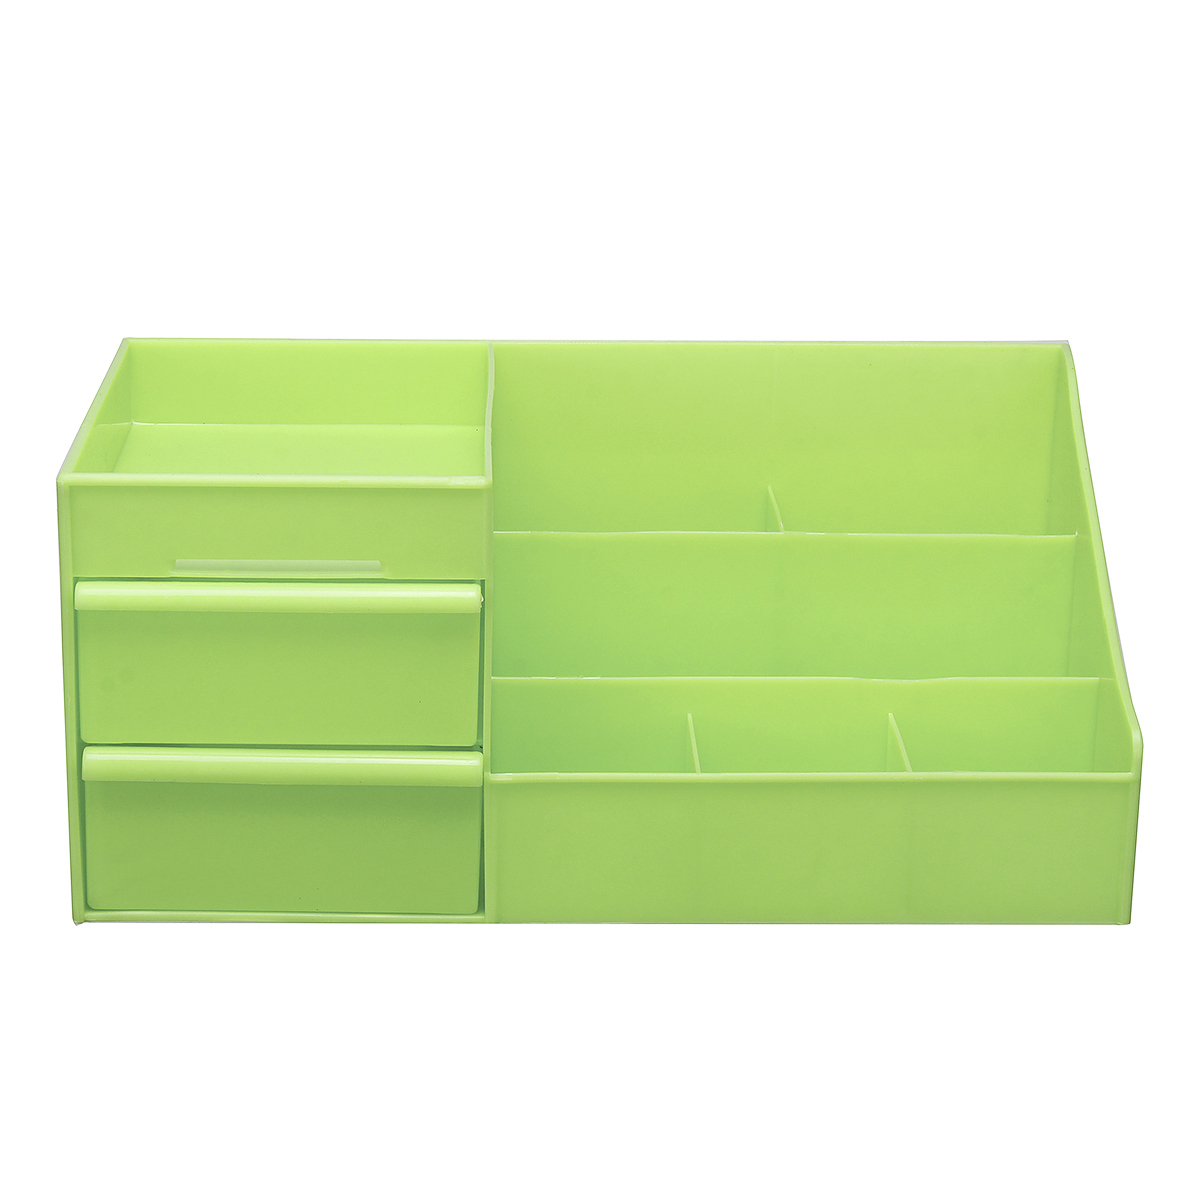 Plastic-Desktop-Organizer-Makeup-Organizer-Cosmetic-Storage-Box-Stationery-Holder-Home-Decorations-1485168-5